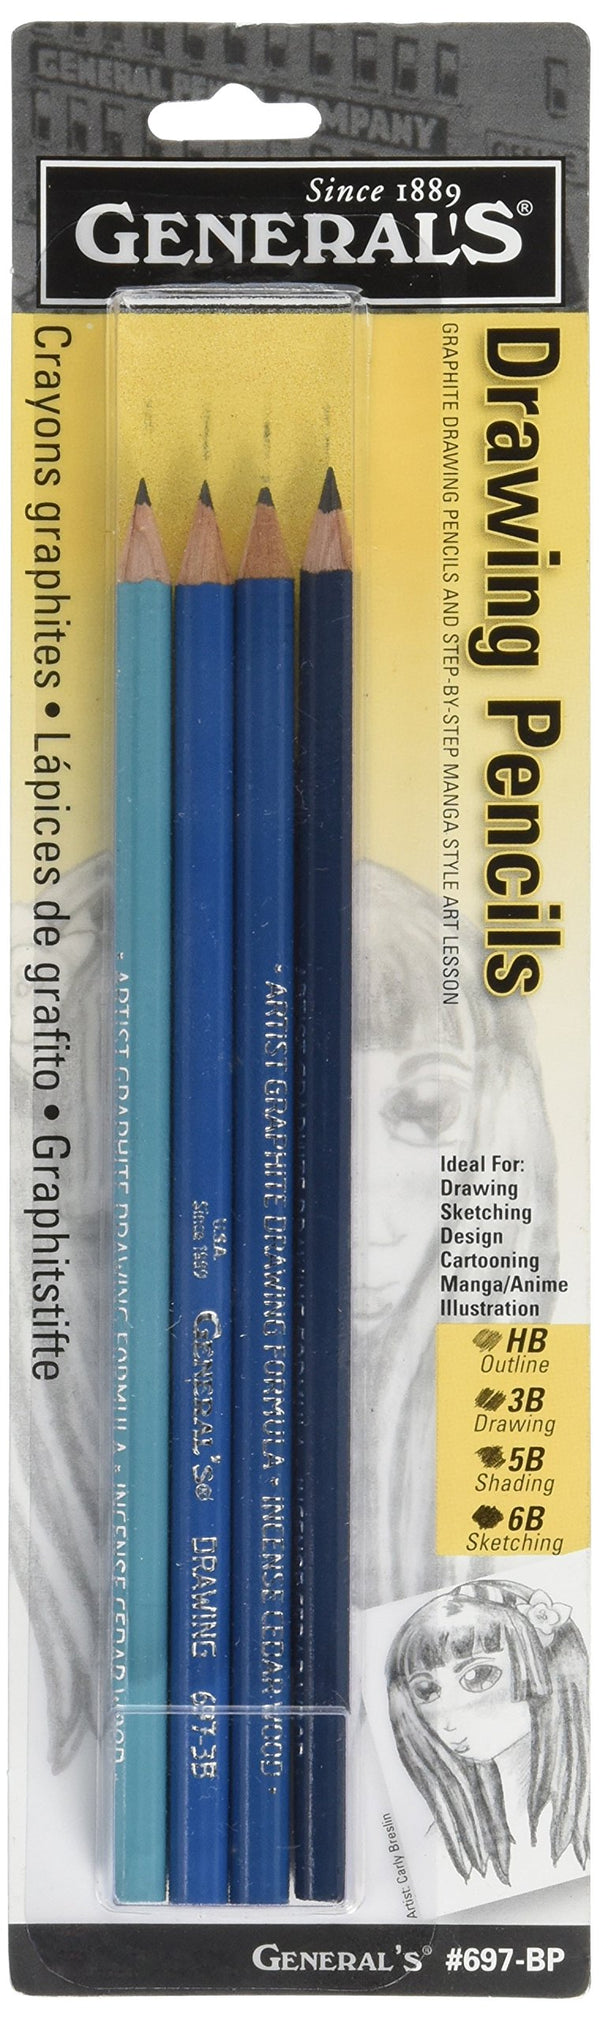 General's Drawing Pencils Set (HB 3B 5B 8B BP)